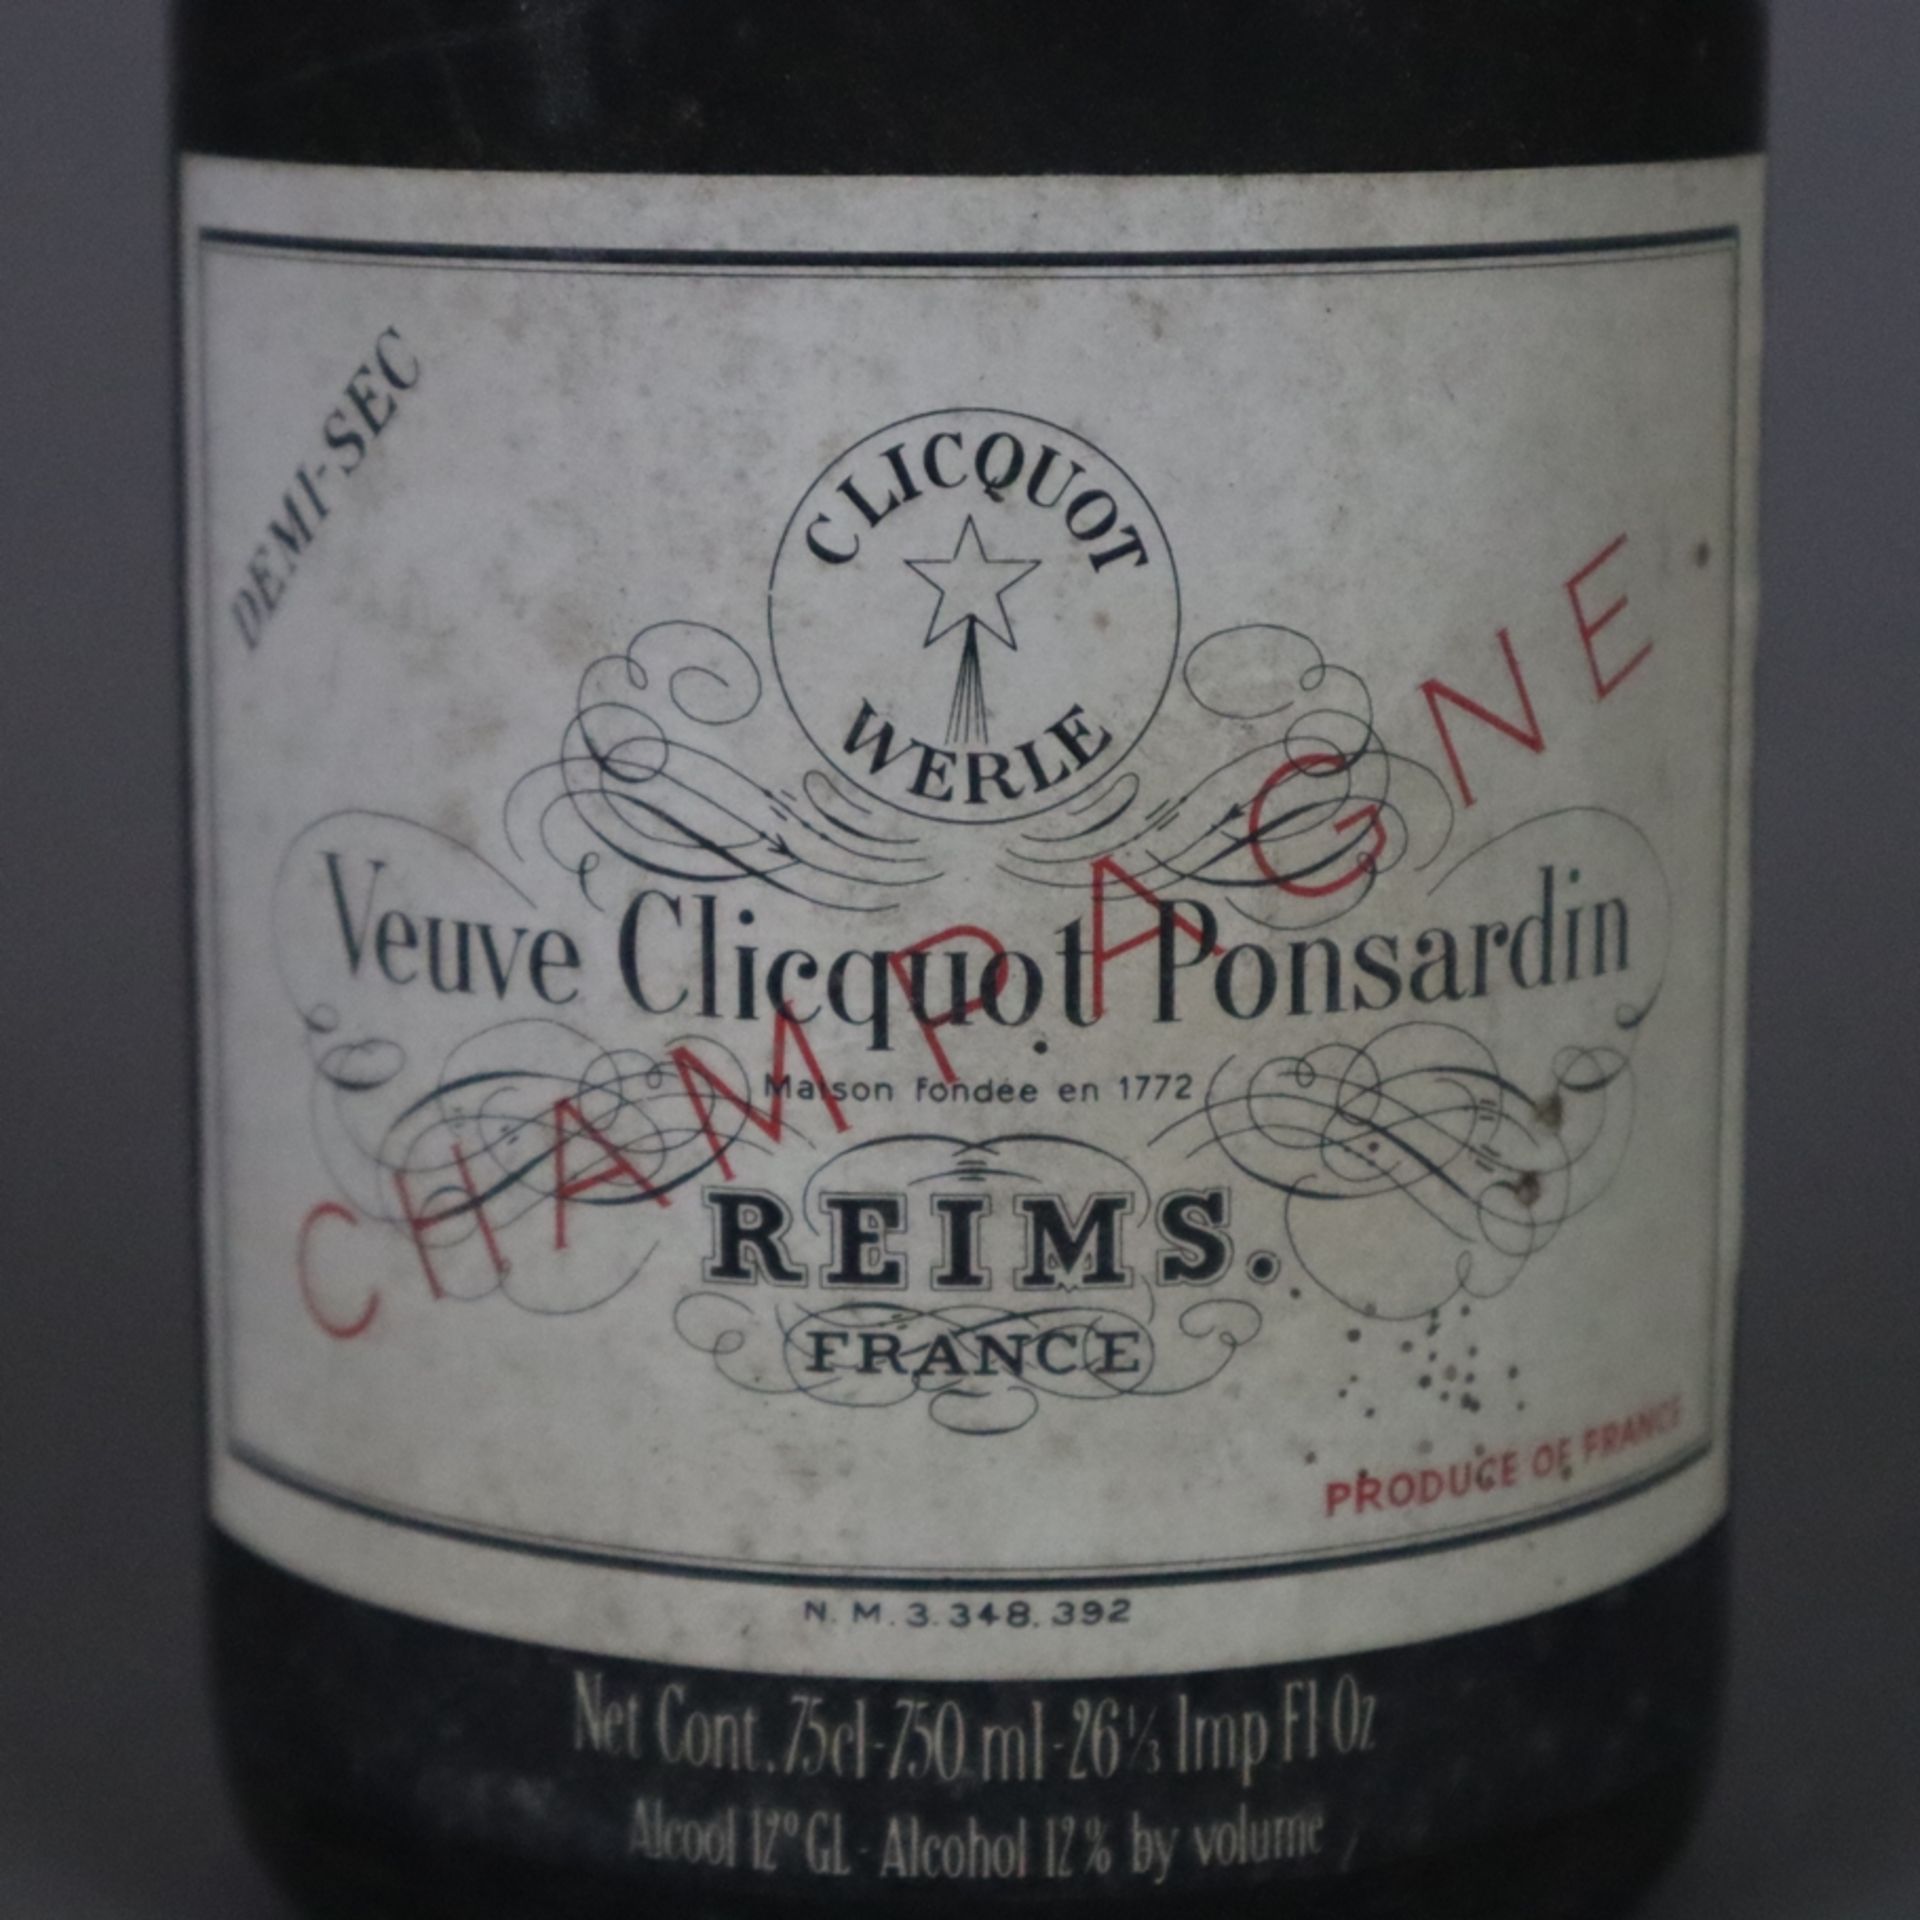 Champagner - Veuve Clicquot Ponsardin Bicentenaire 1772-1972 Brut, Reims, France, 750ml, Flasche ve - Image 3 of 5